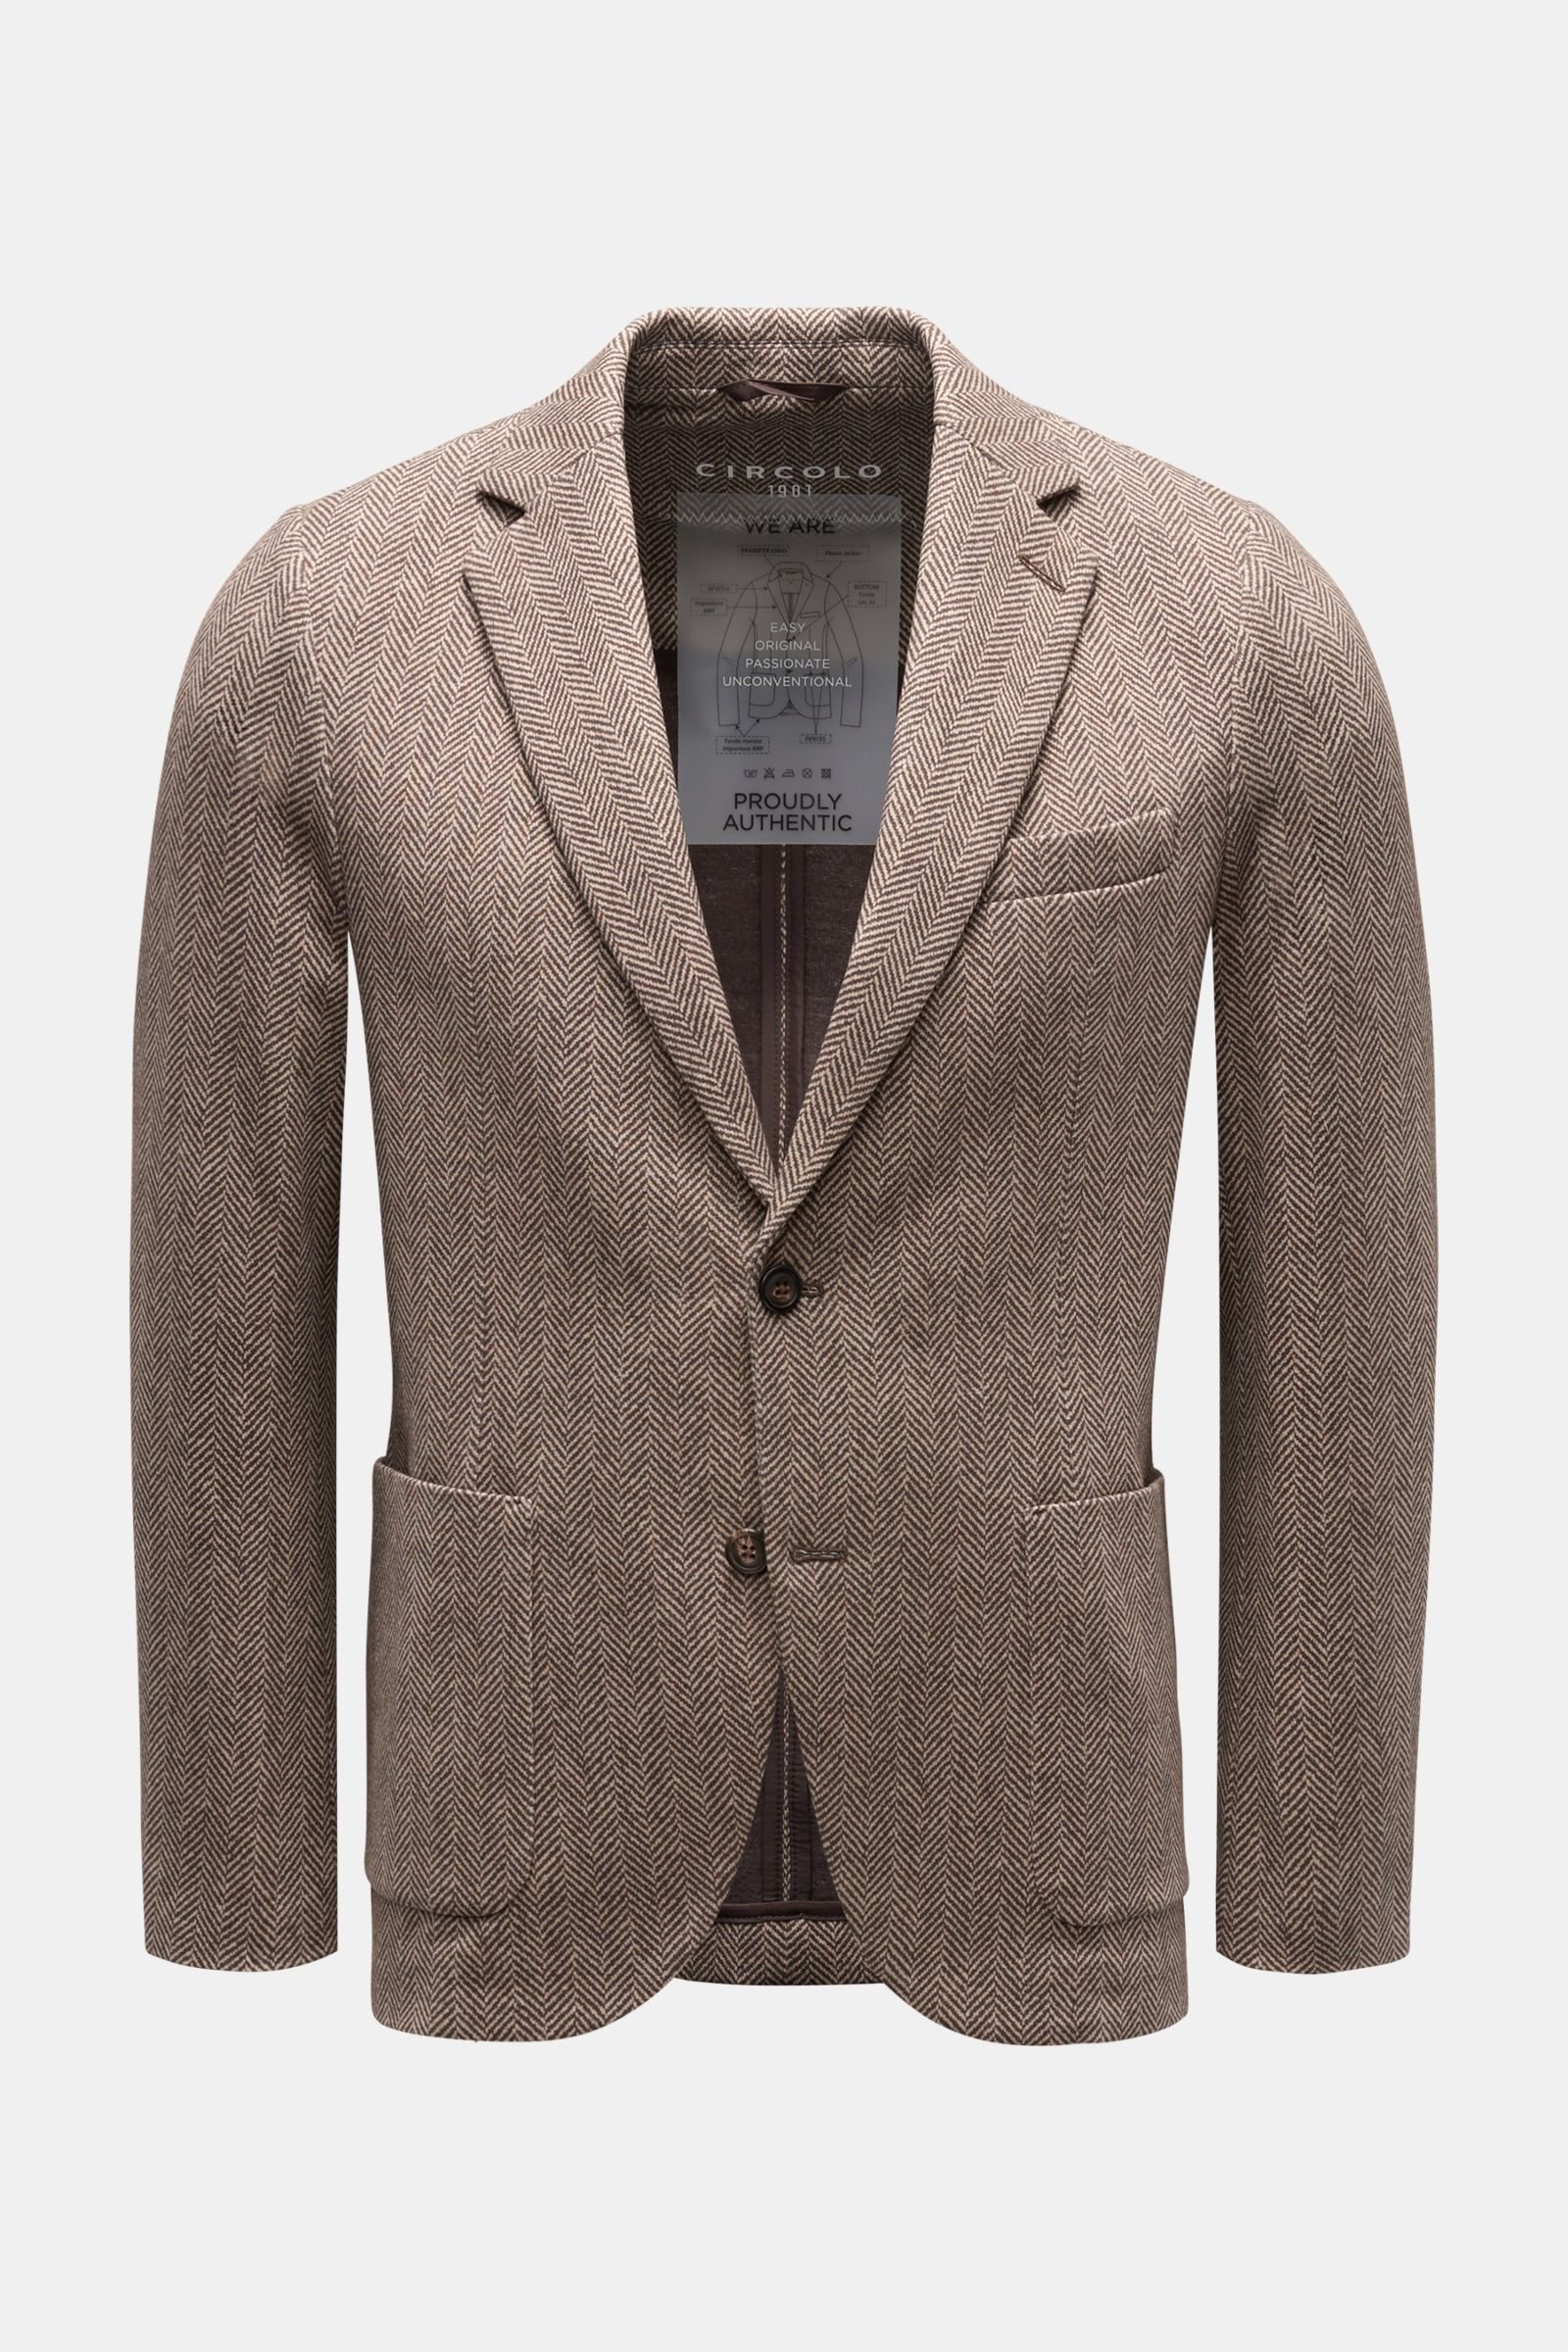 Jersey jacket dark brown/beige patterned